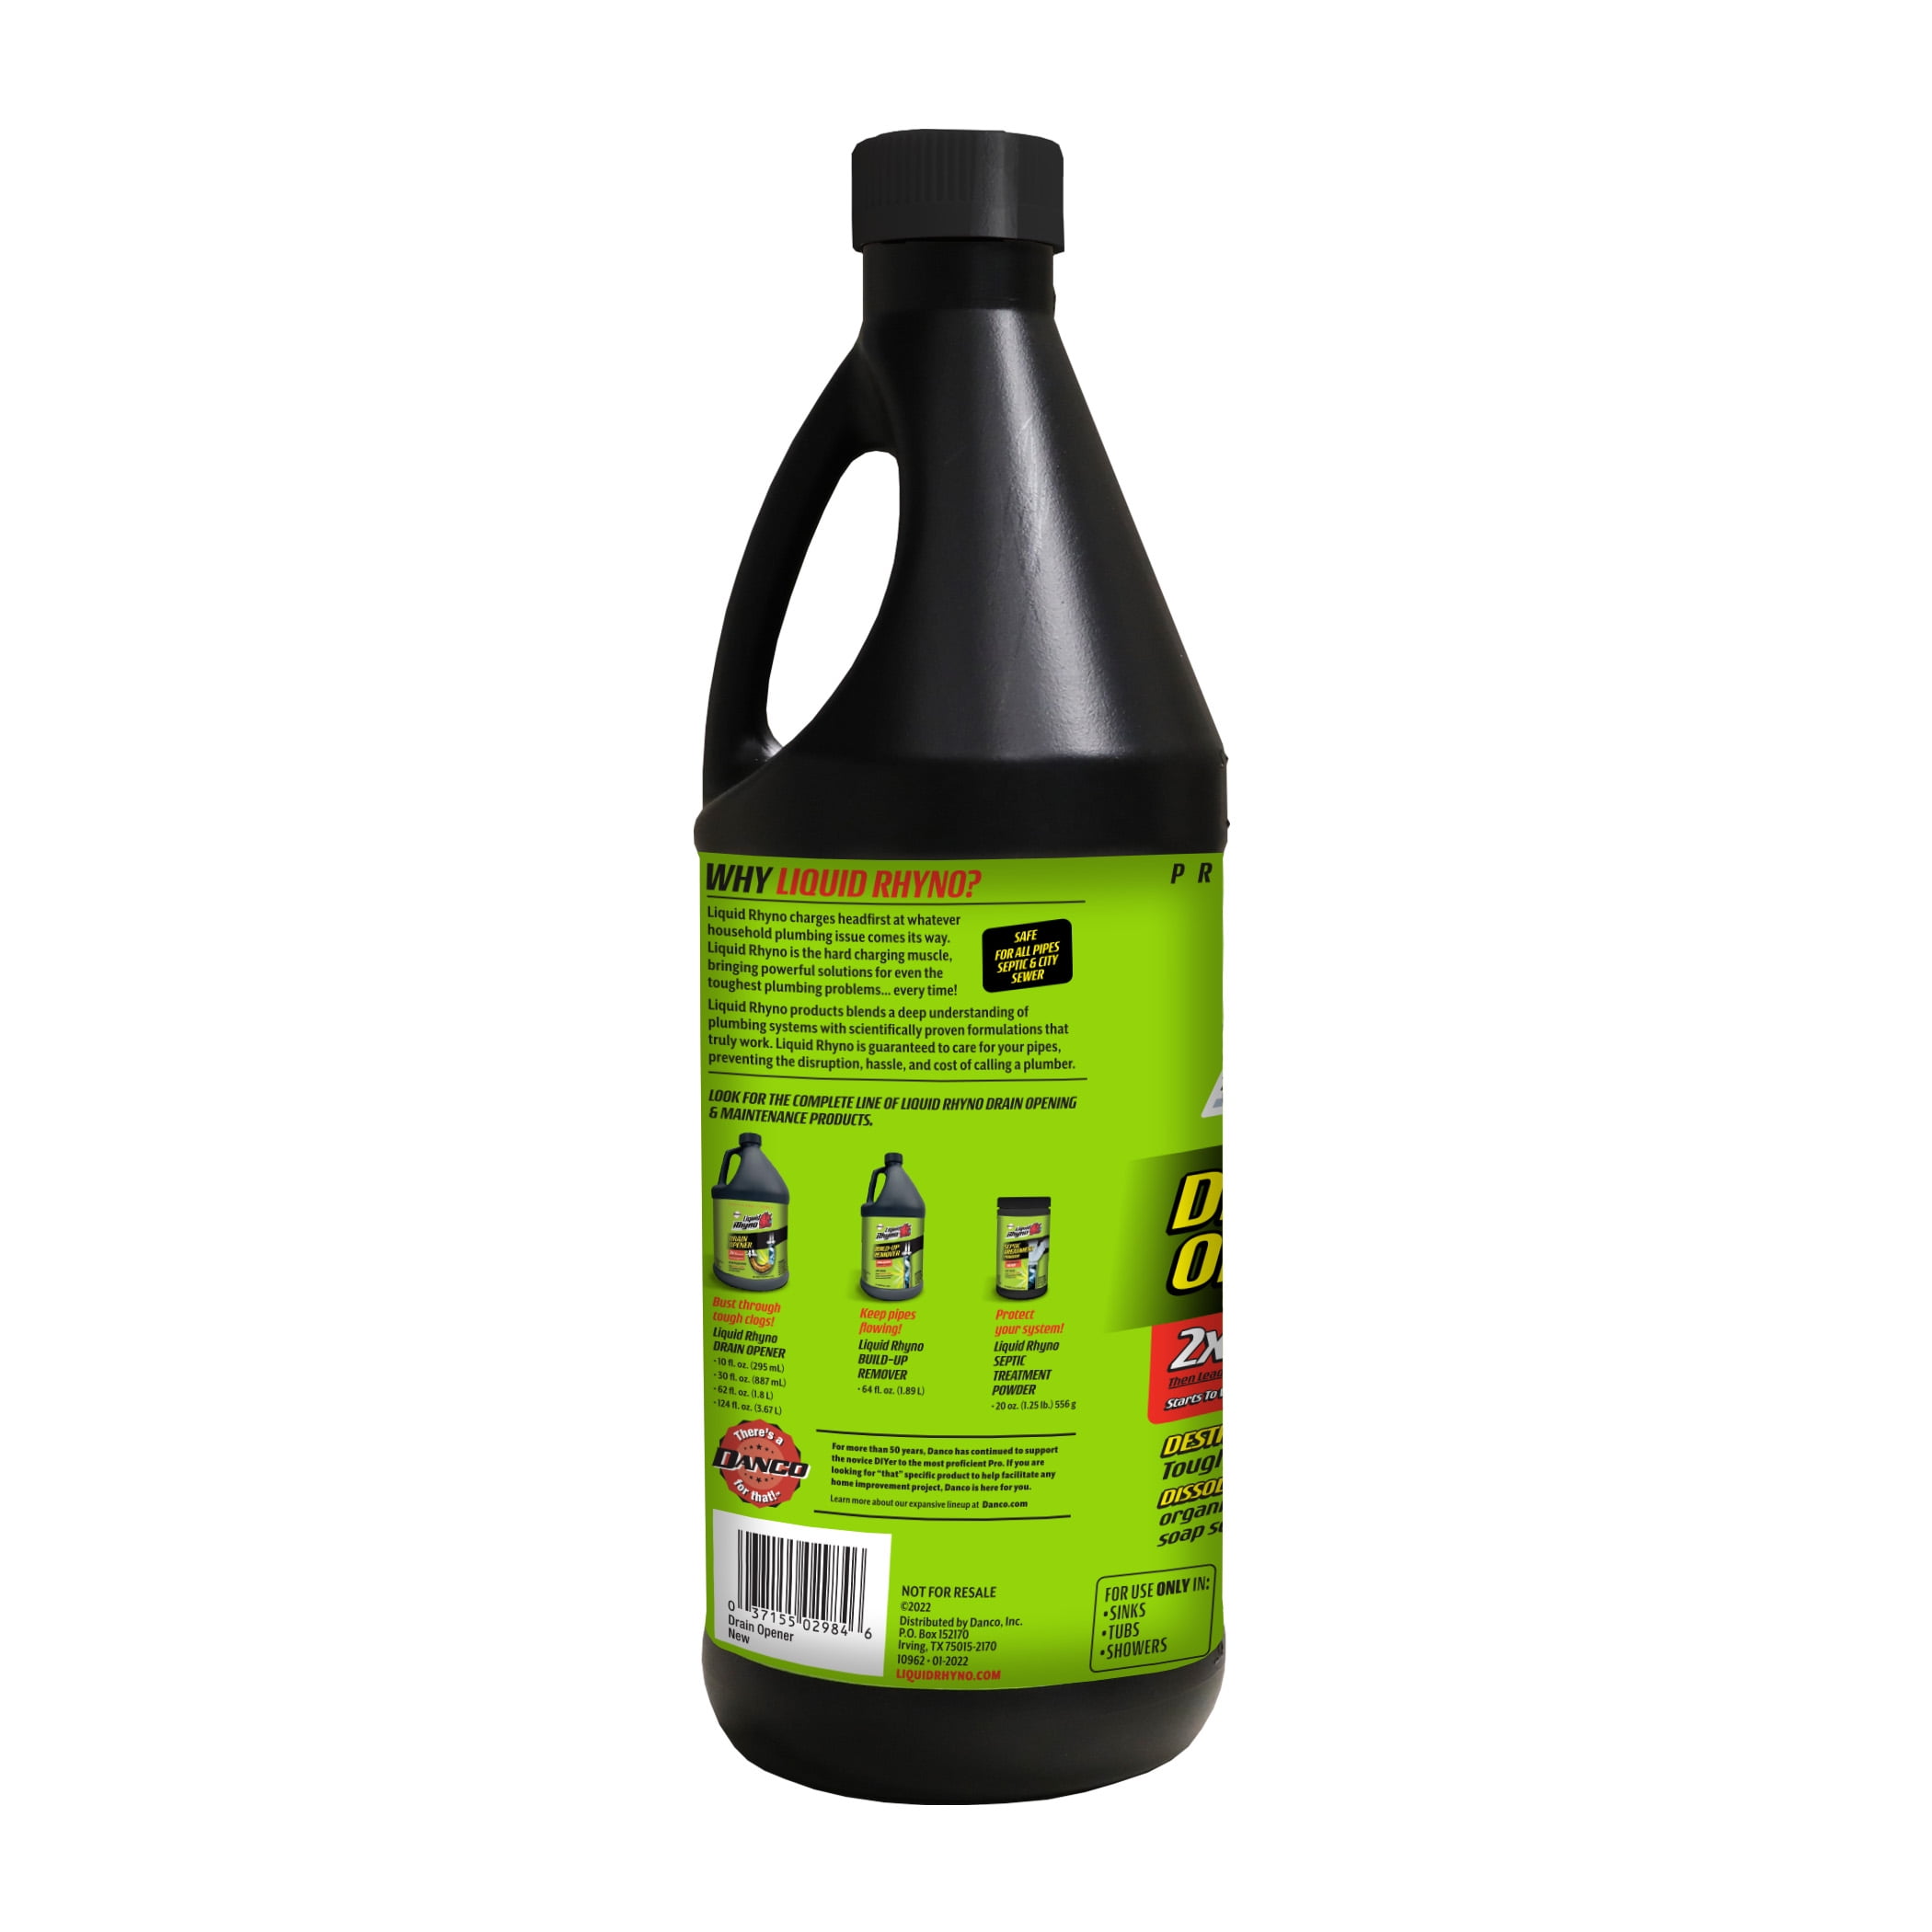 Danco Liquid Rhyno 62-fl oz Drain Cleaner